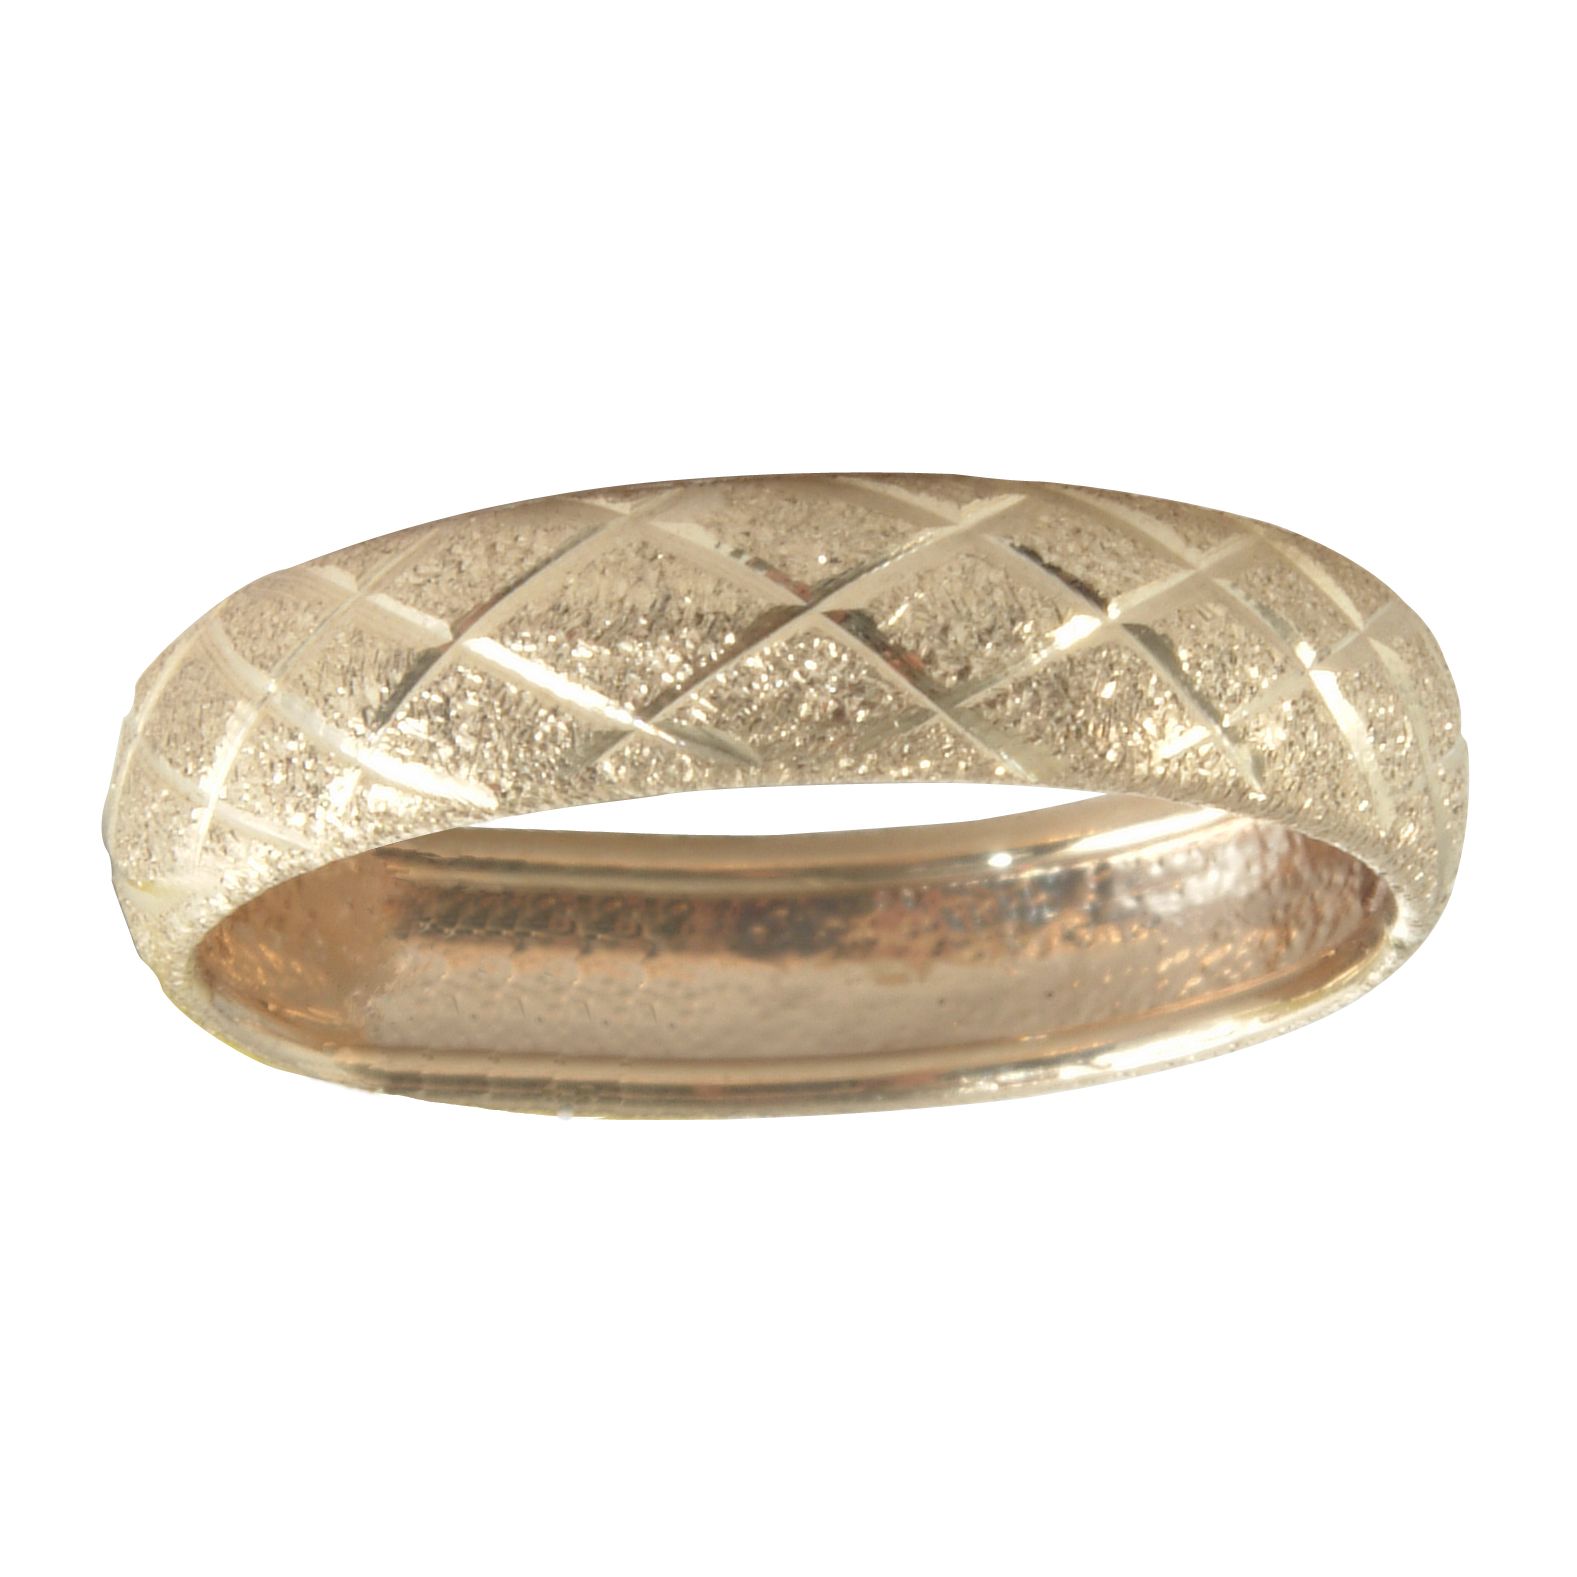 Finger Bangle with Engraved Diamond Shape Design 10kt